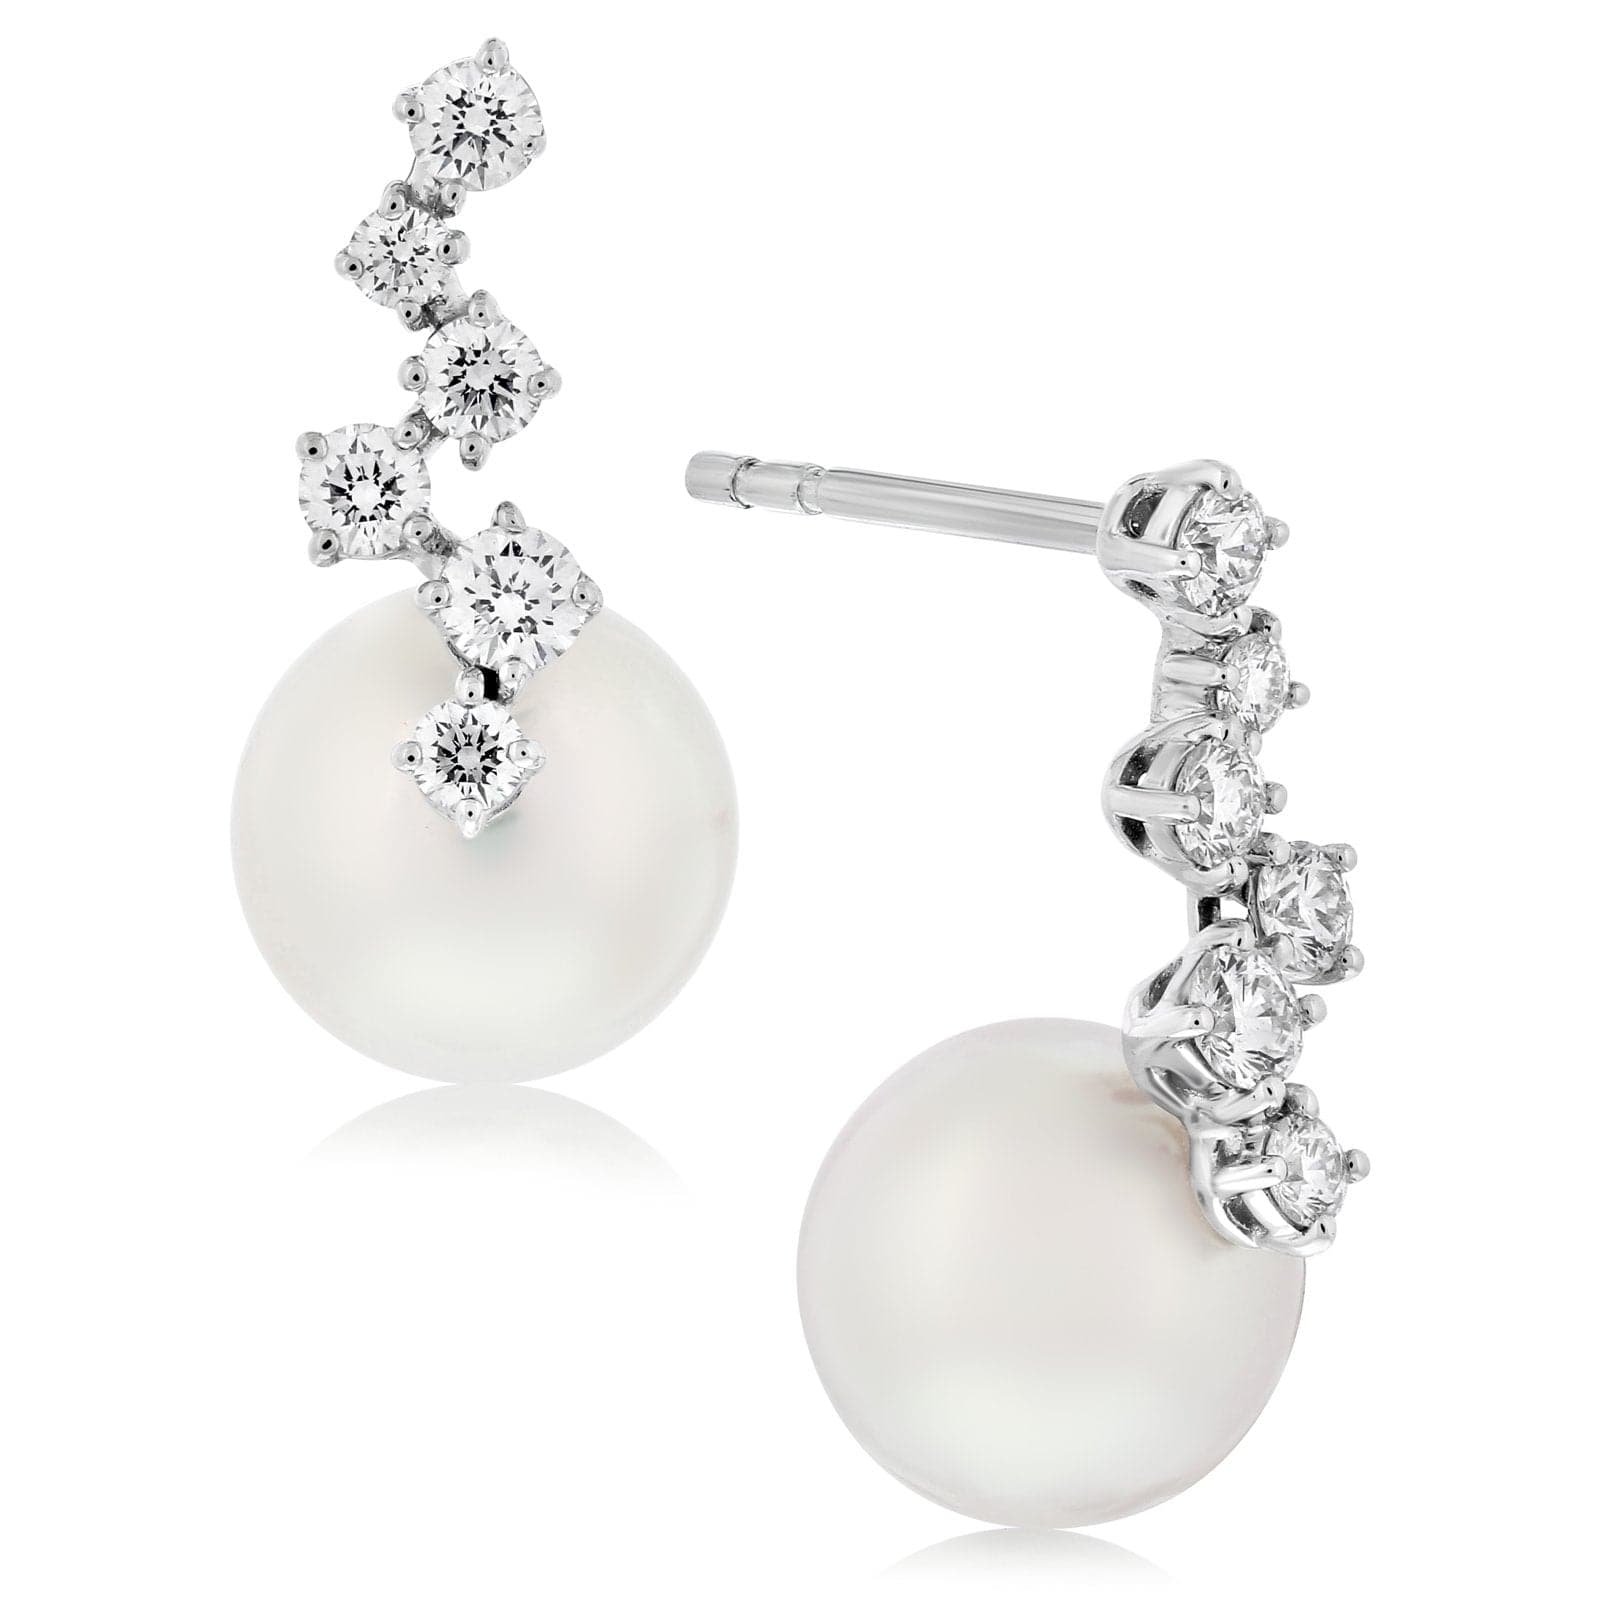 Pearl earrings PT platinum 0.2ct diamond earrings 11-12mm Daikei black  pearls pt900 platinum - Shop KOKO PEARL JEWELRY Earrings & Clip-ons - Pinkoi